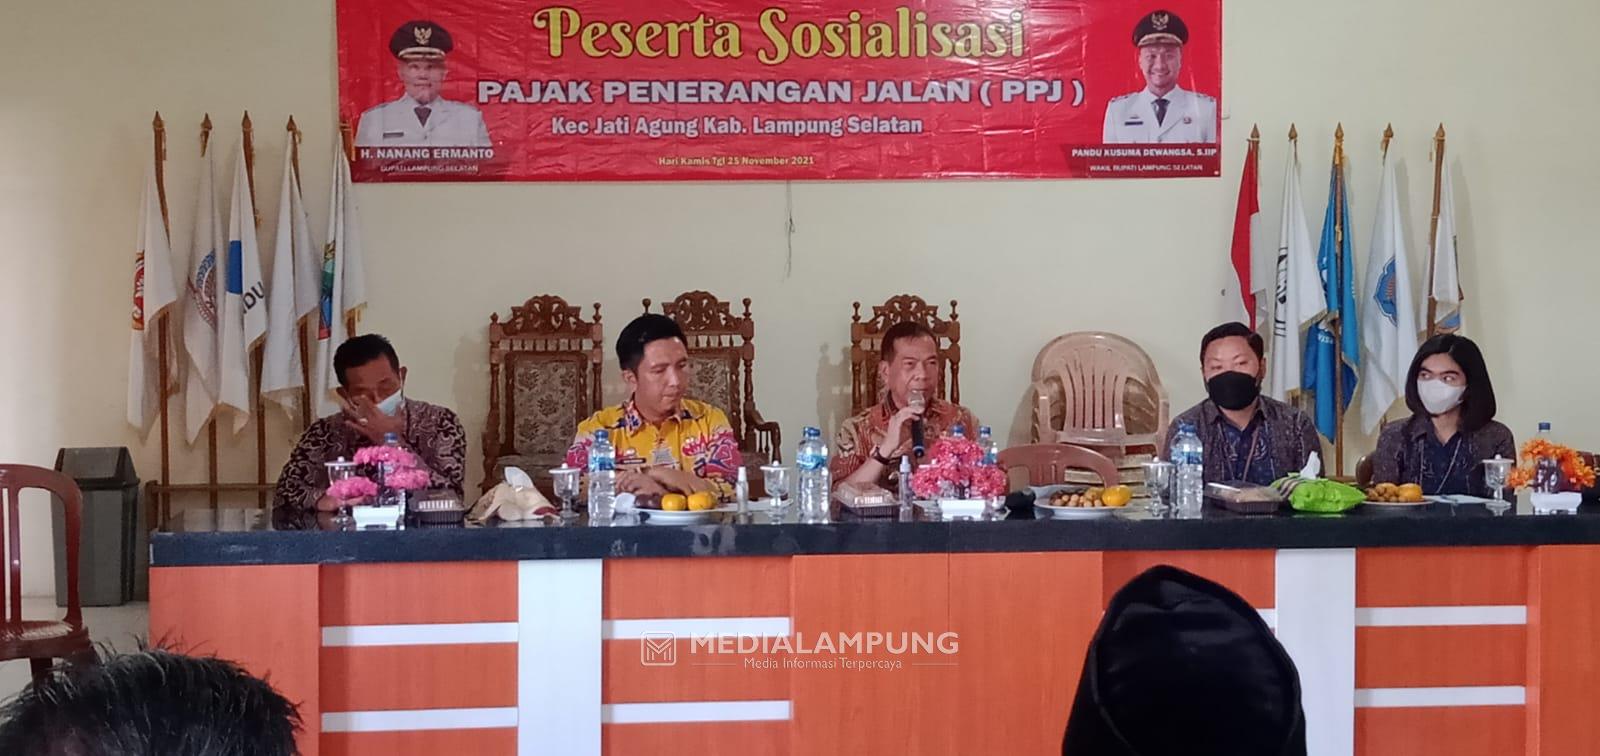 Bersama PLN, Pemkab Lamsel Gelar Sosialisasi PPJ di Jatiagung 